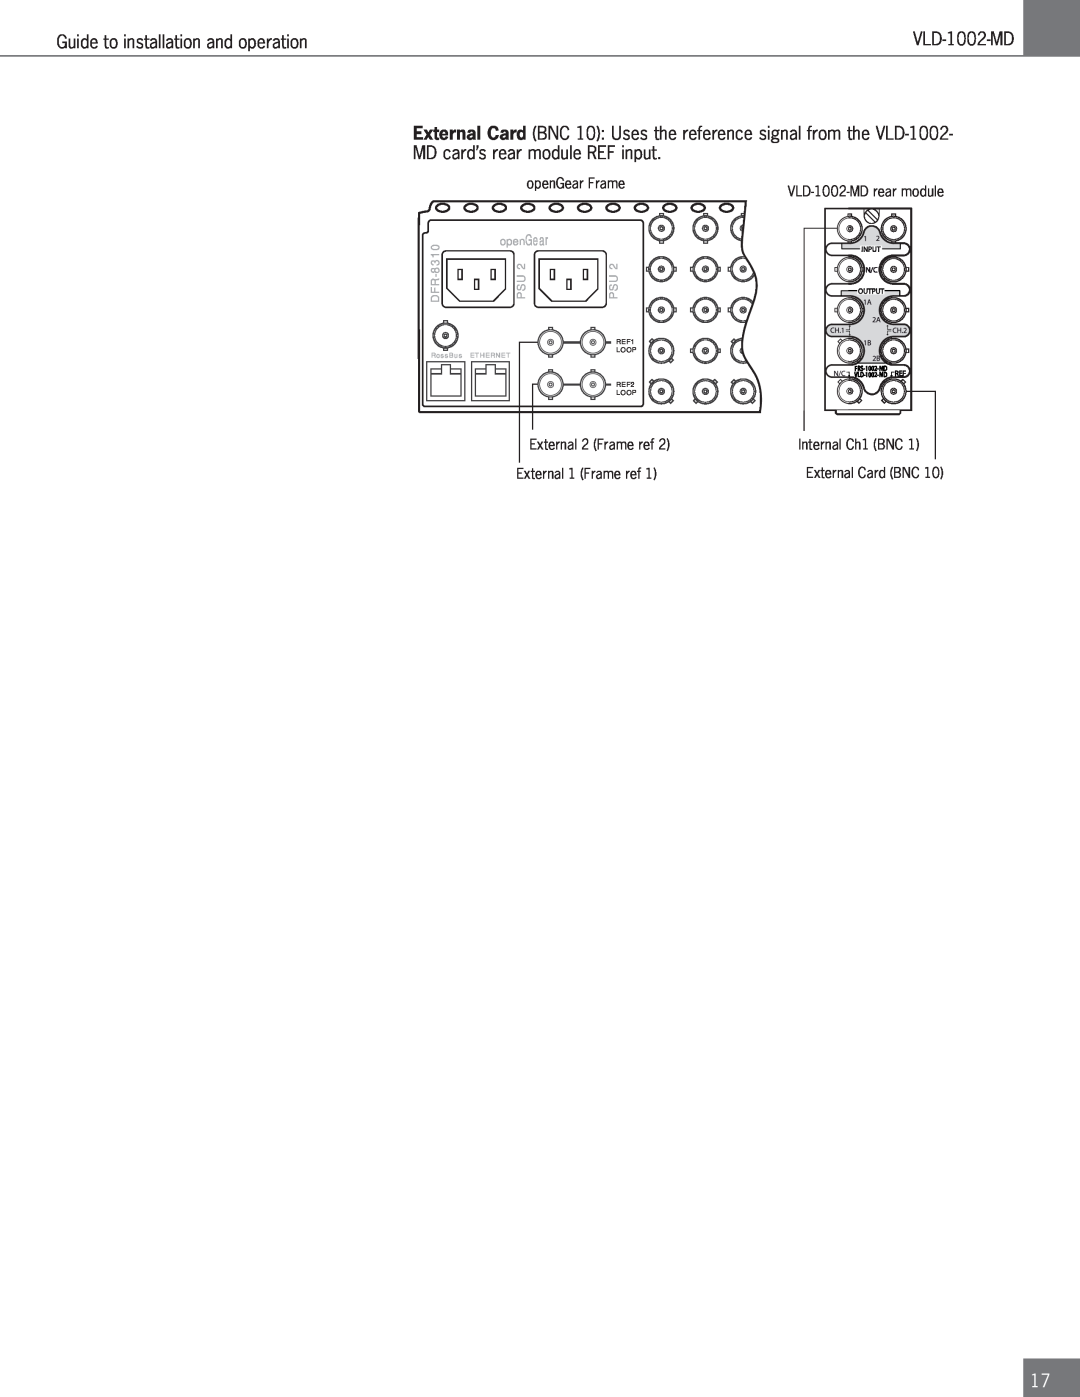 Algolith VLD-1002-MD operation manual DFR-8310, openGear, External Card BNC, REF1, RossBus ETHERNET, Loop, REF2 